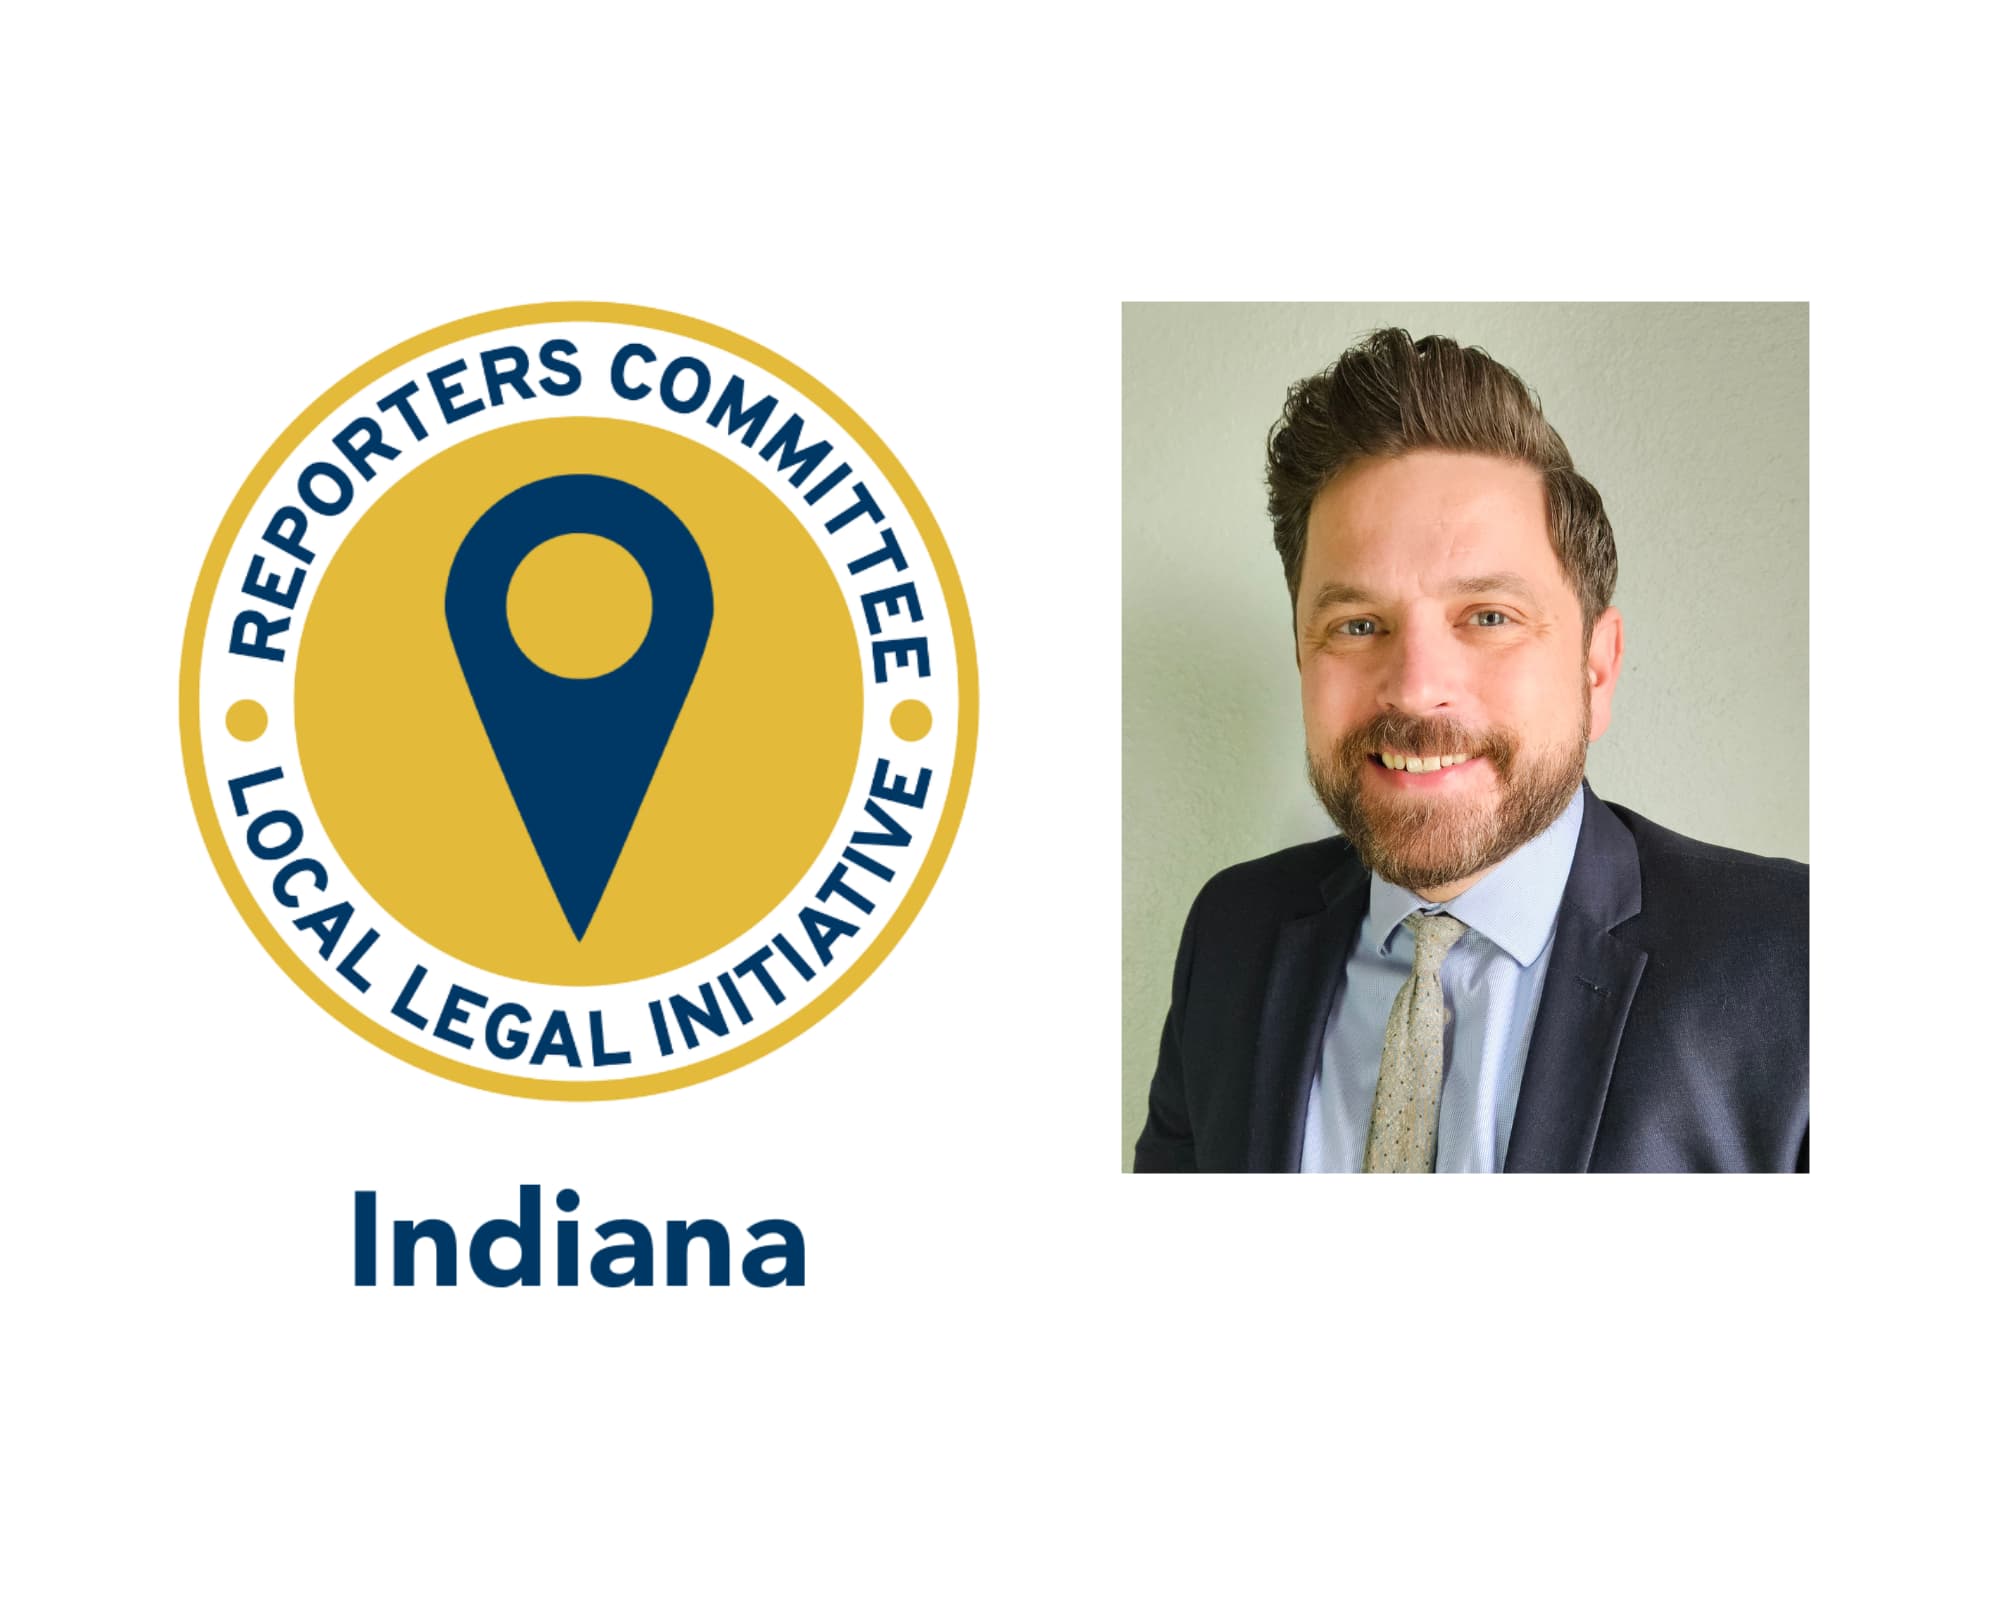 Indiana Local Legal Initiative logo next to headshot for Indiana Local Legal Initiative Attorney Kris Cundiff